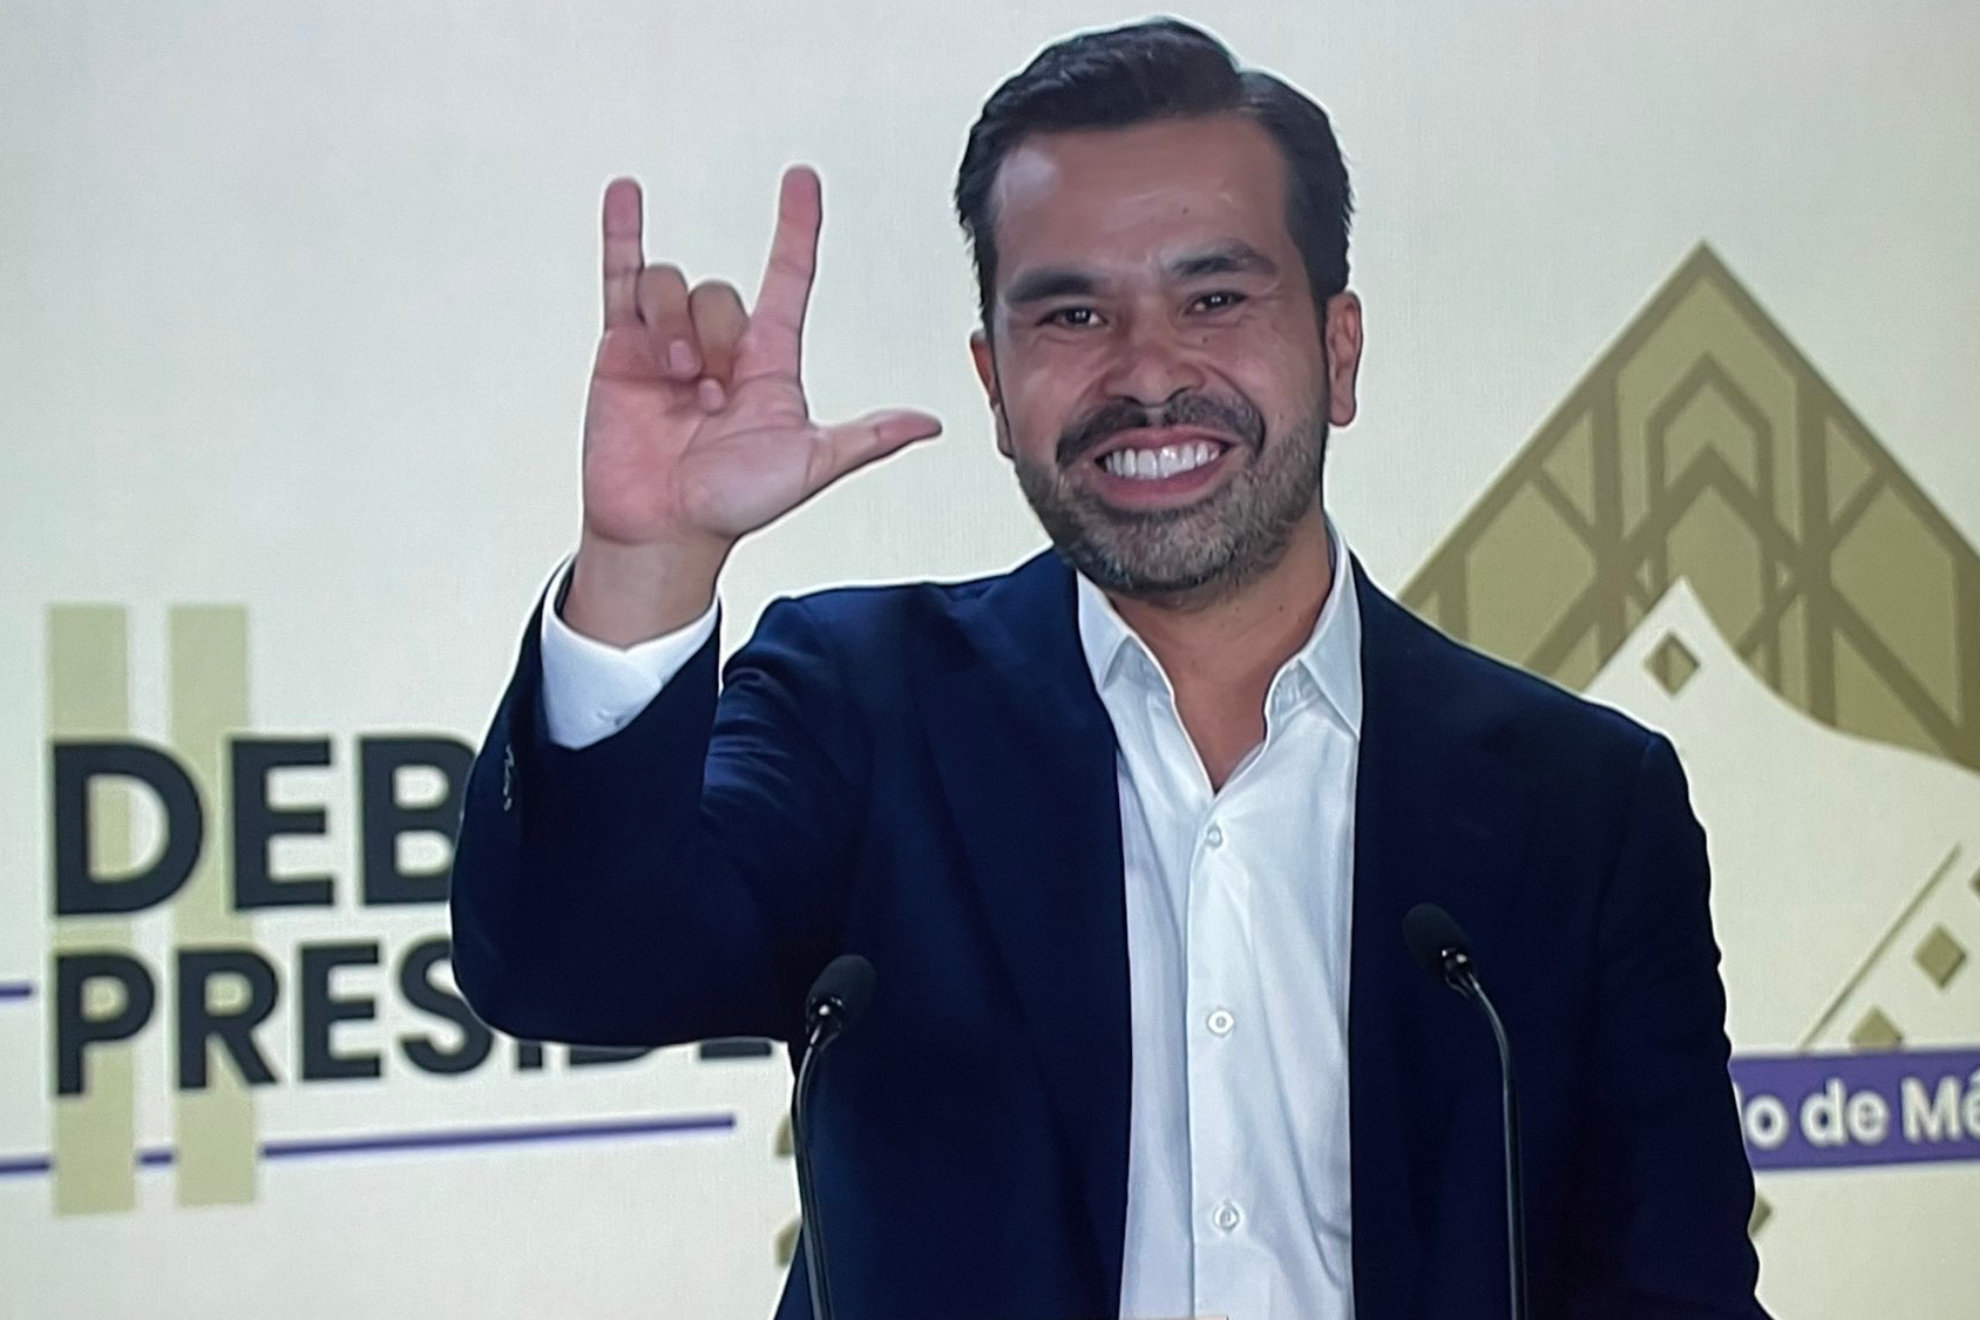 Jorge lvarez Mynez, candidato presidencial Movimiento Ciudadano